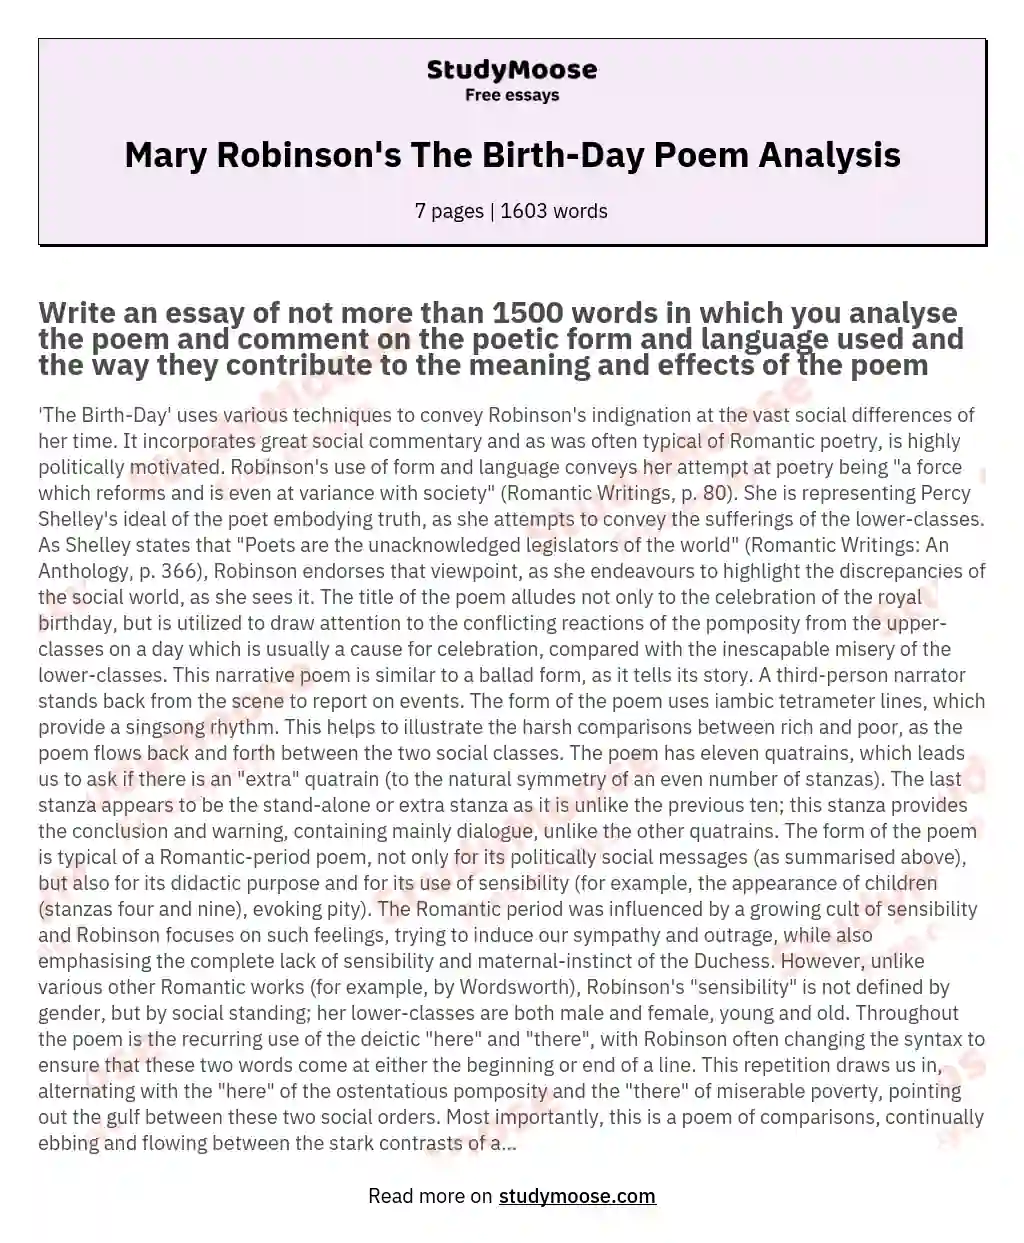 Mary Robinson's The Birth-Day Poem Analysis essay